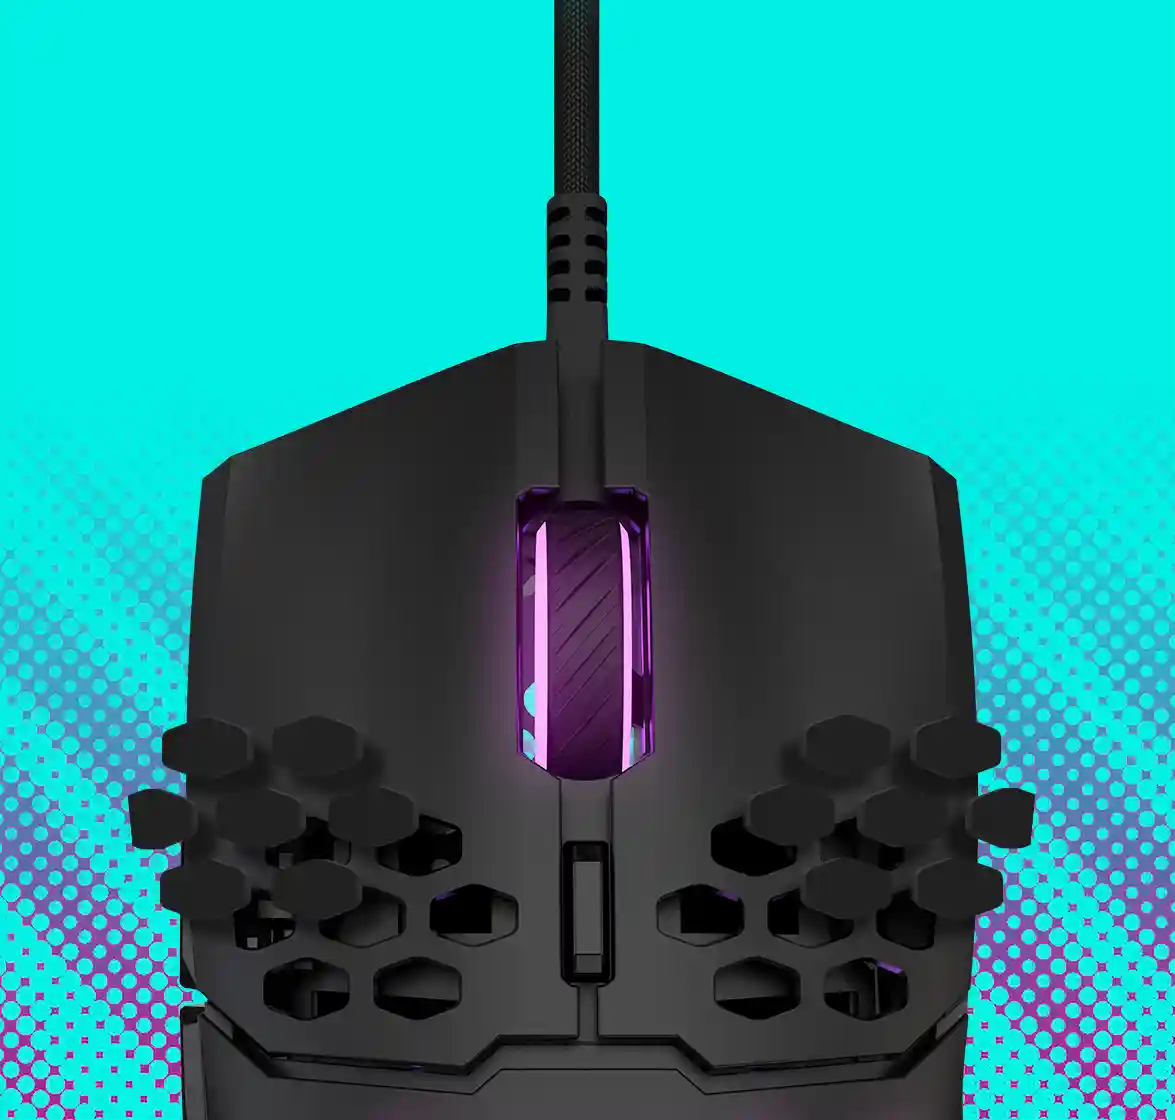 Cooler Master MM712 Hybrid Ultra Light RGB Wireless Gaming Mouse - Black